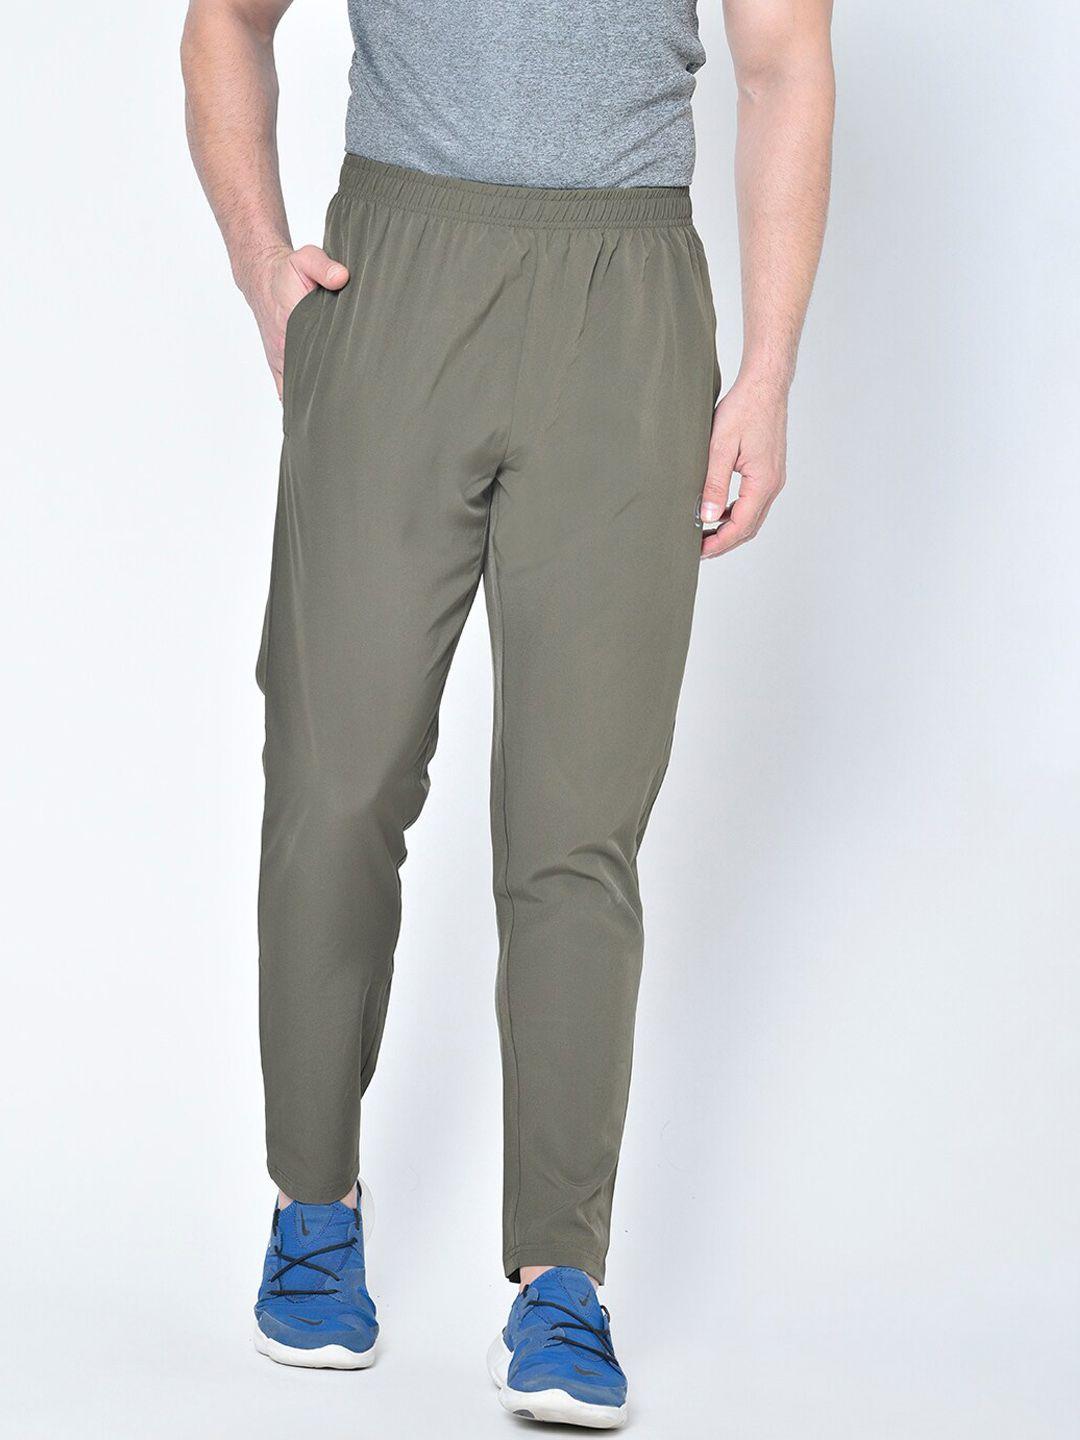 chkokko-men-green-solid-regular-fit-track-pants